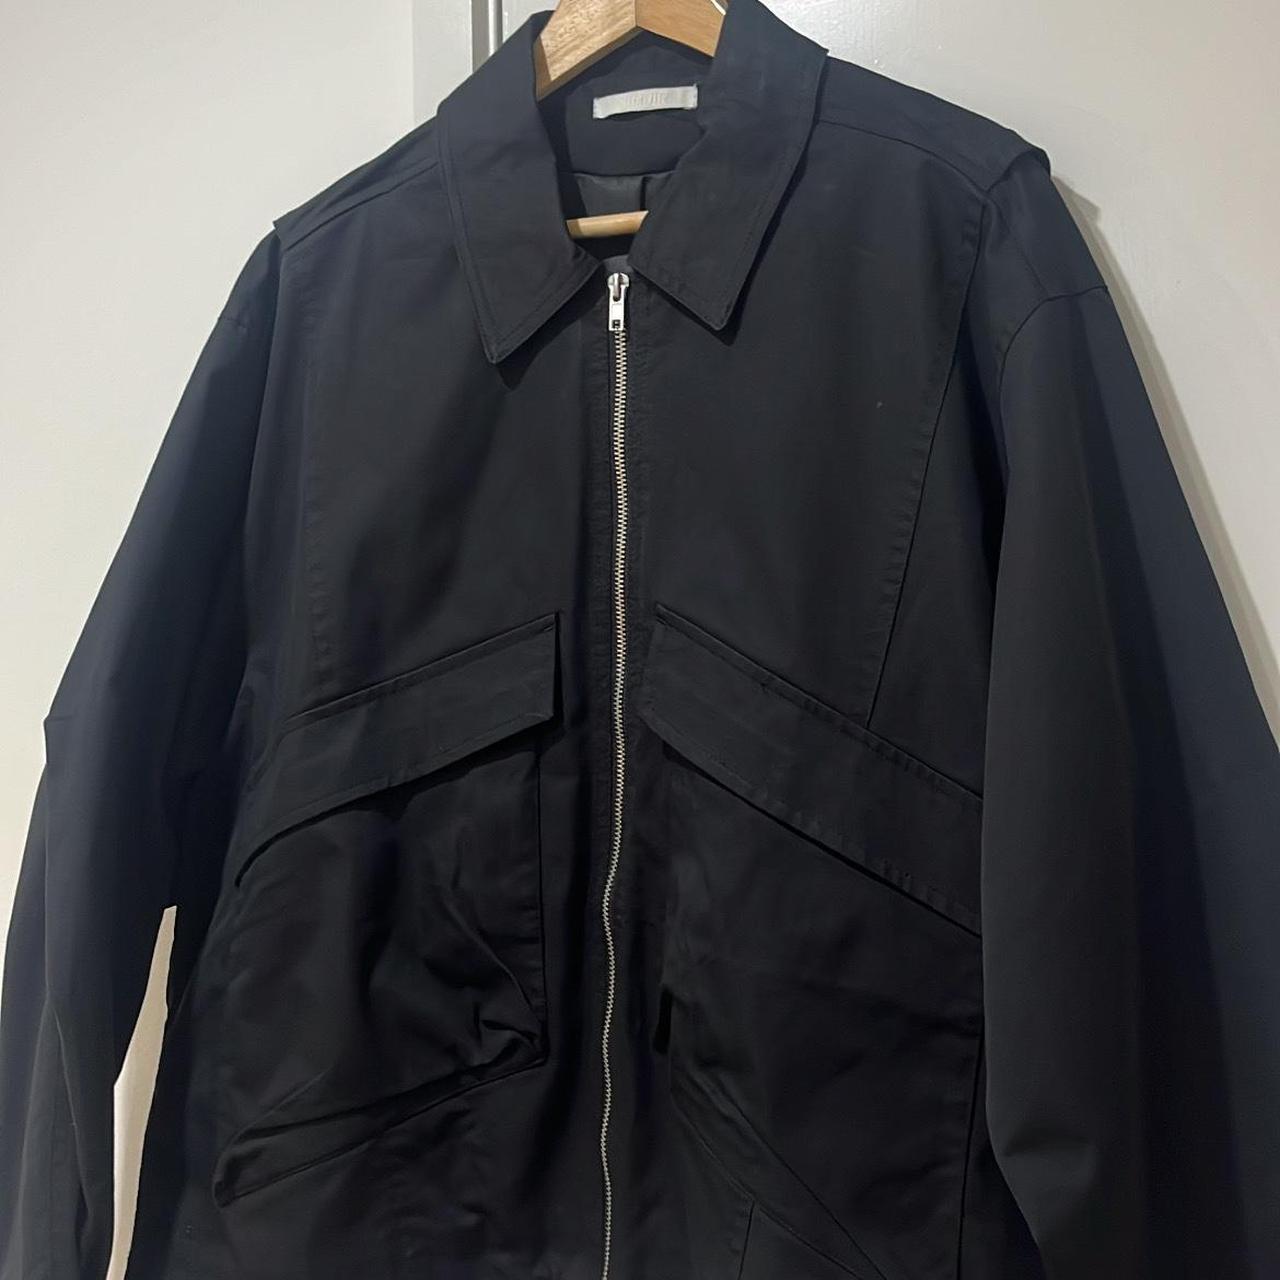 Kimuir South Korean brand cropped jacket Brand new... - Depop